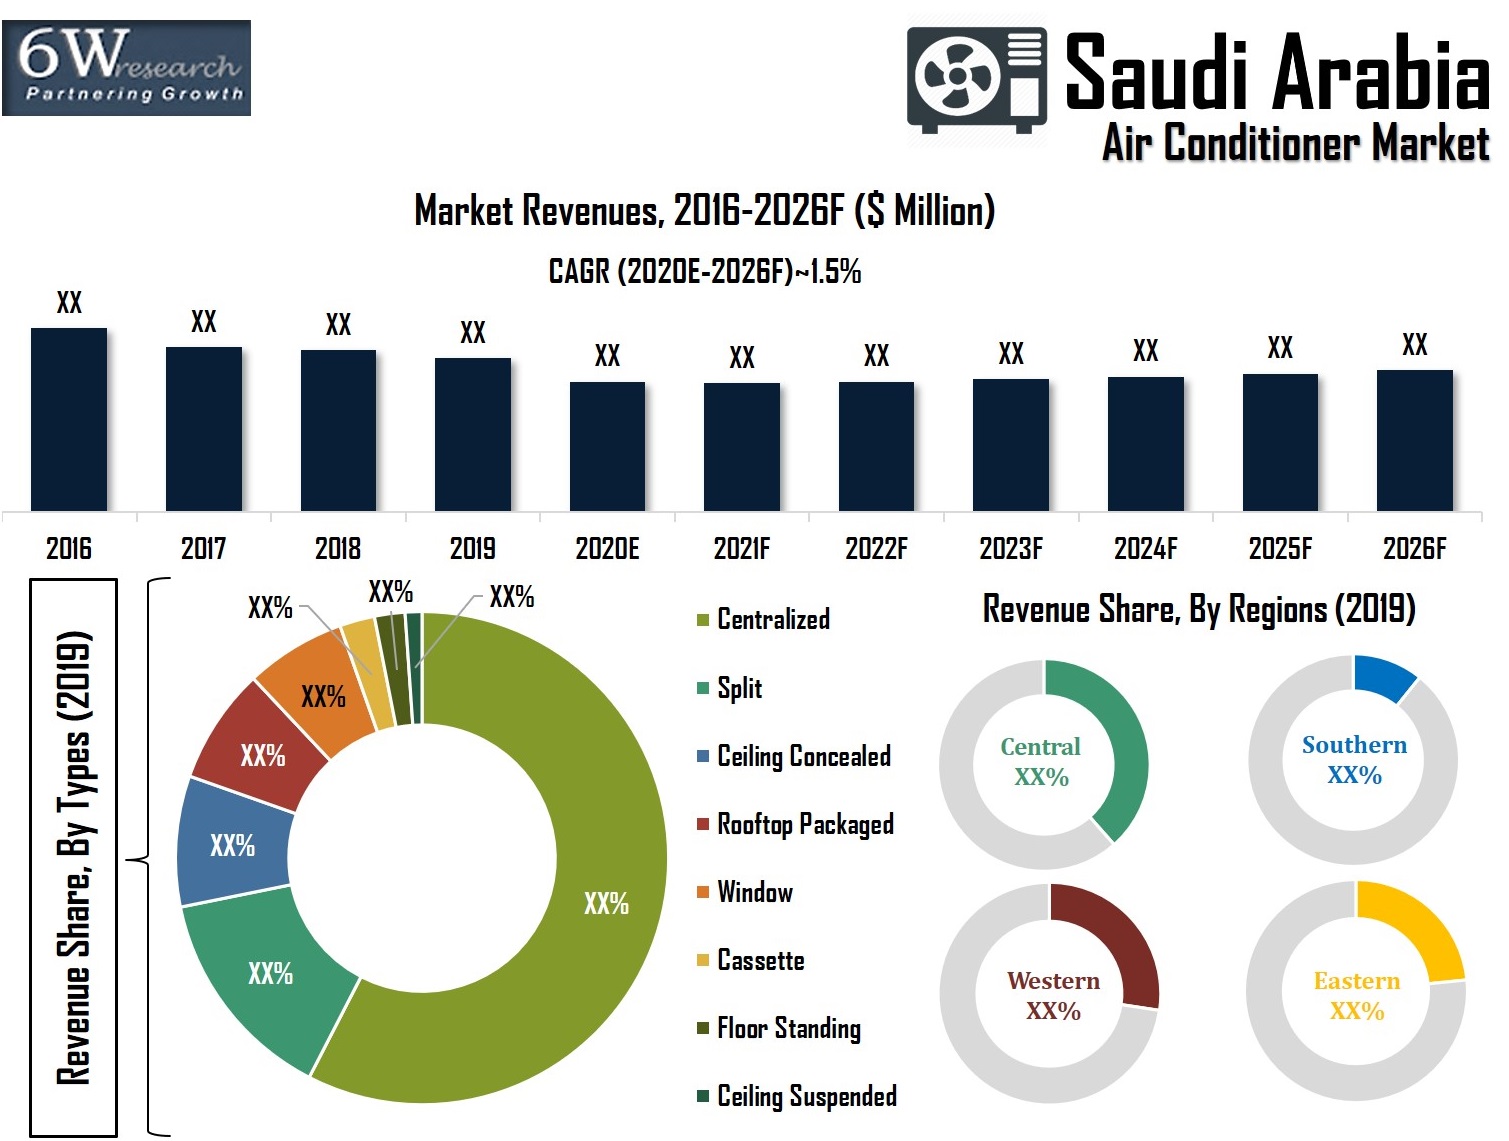 Saudi Arabia Air Conditioner Market (2020-2026) Overview